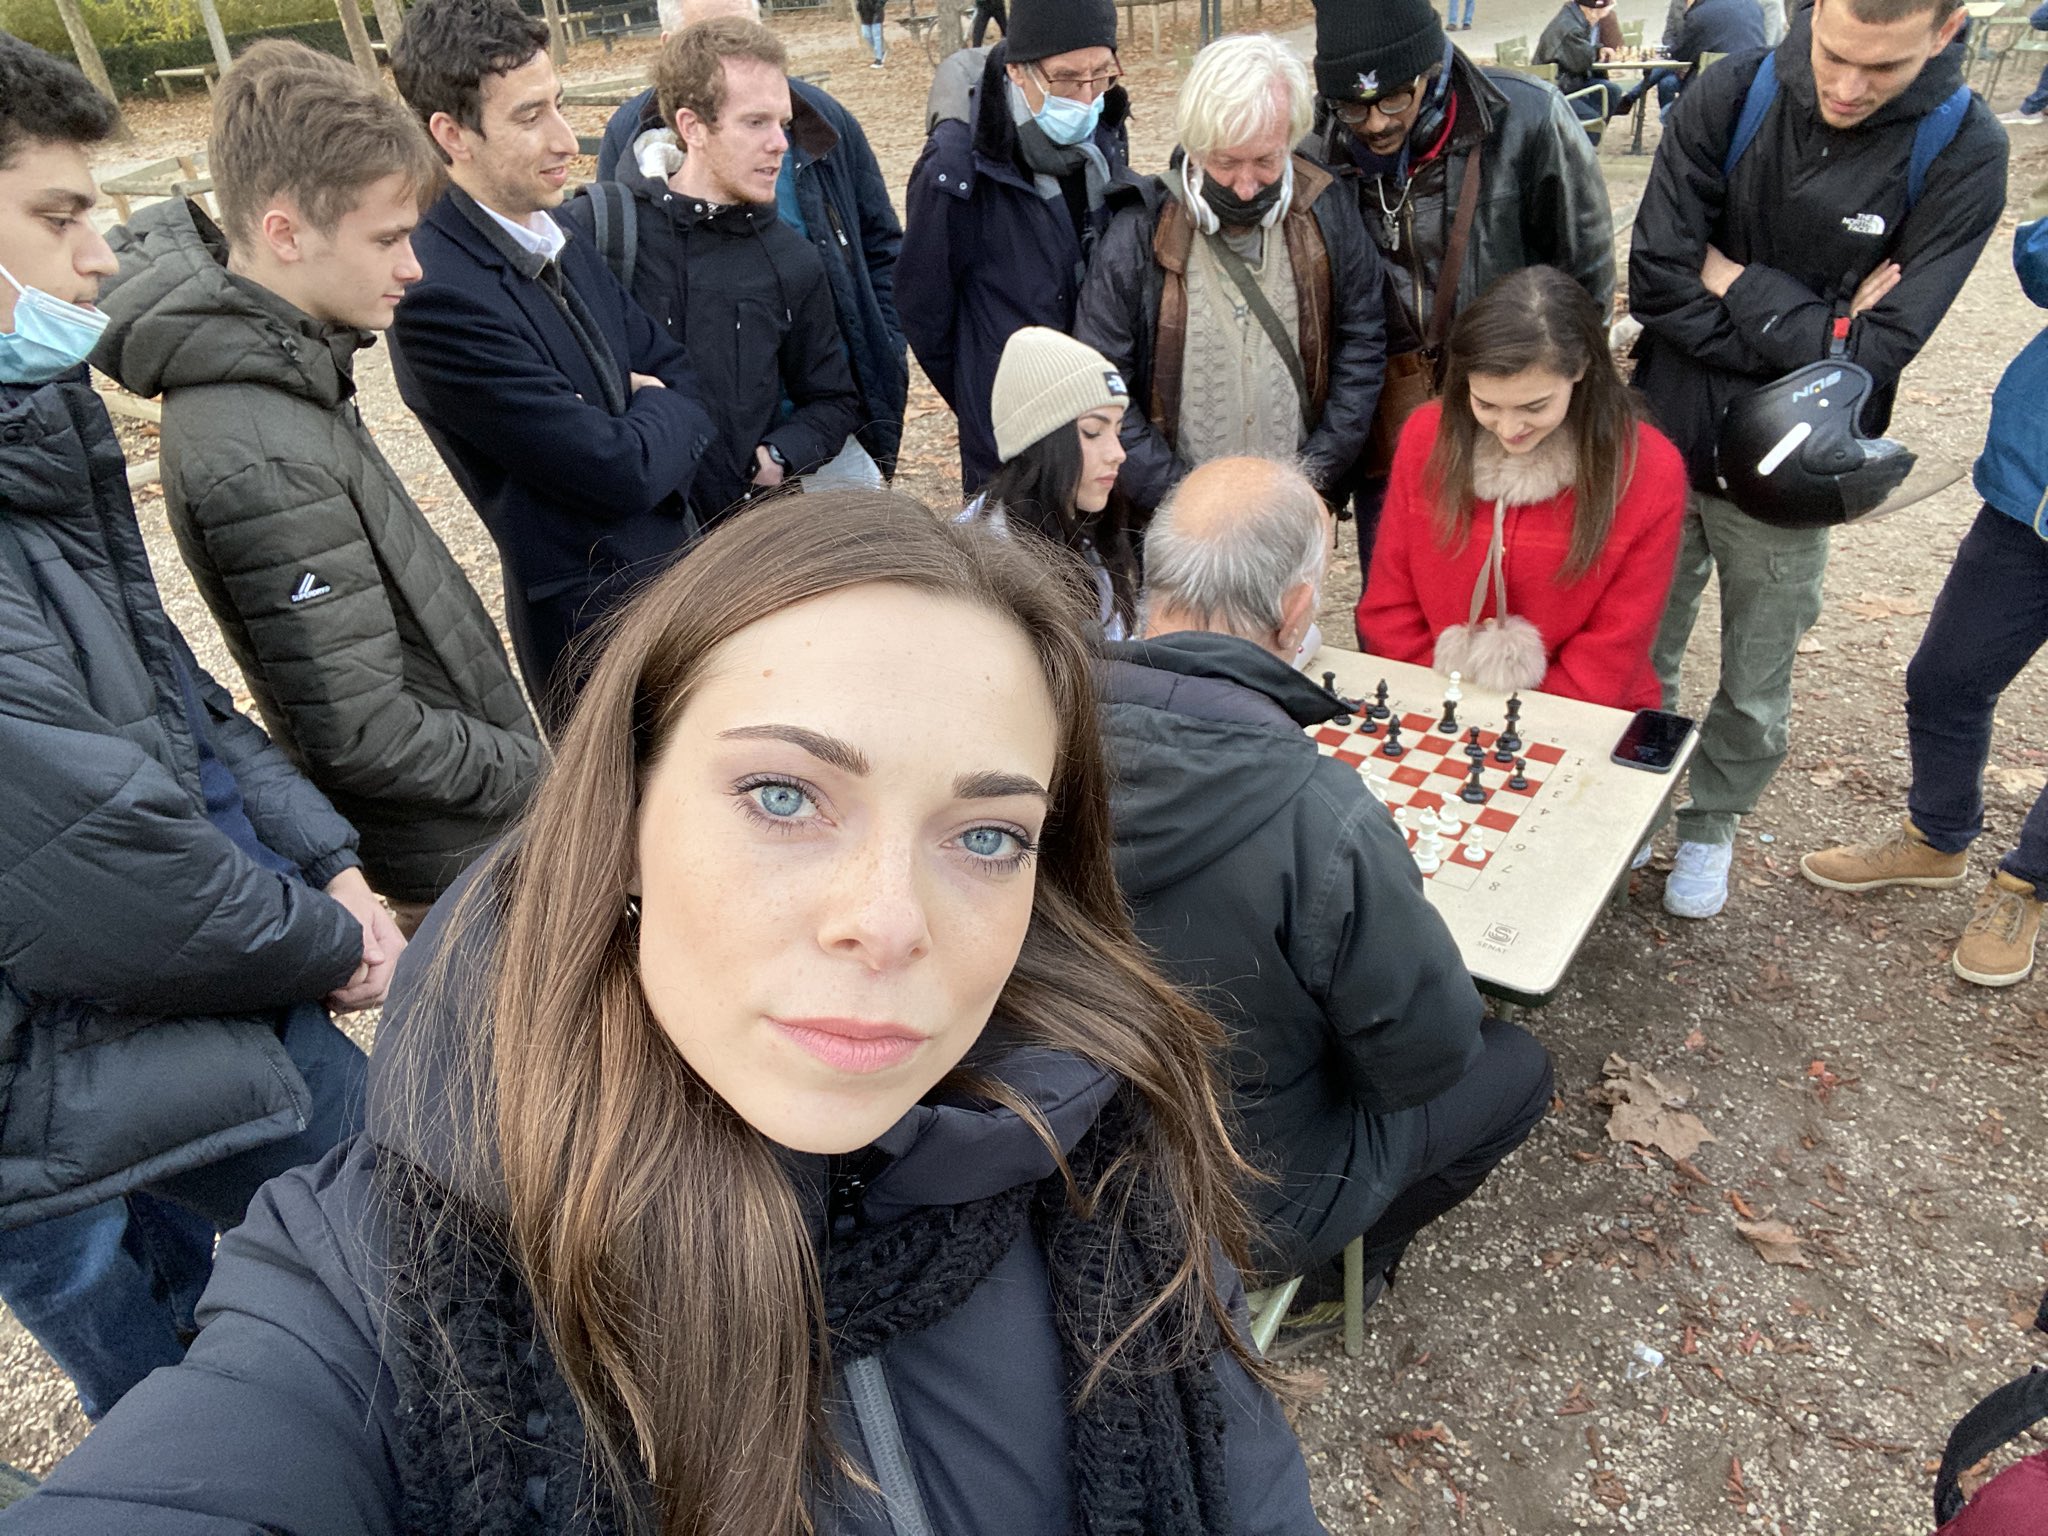 Dina Belenkaya on X: “Accidentally” passing by ♟ #chess